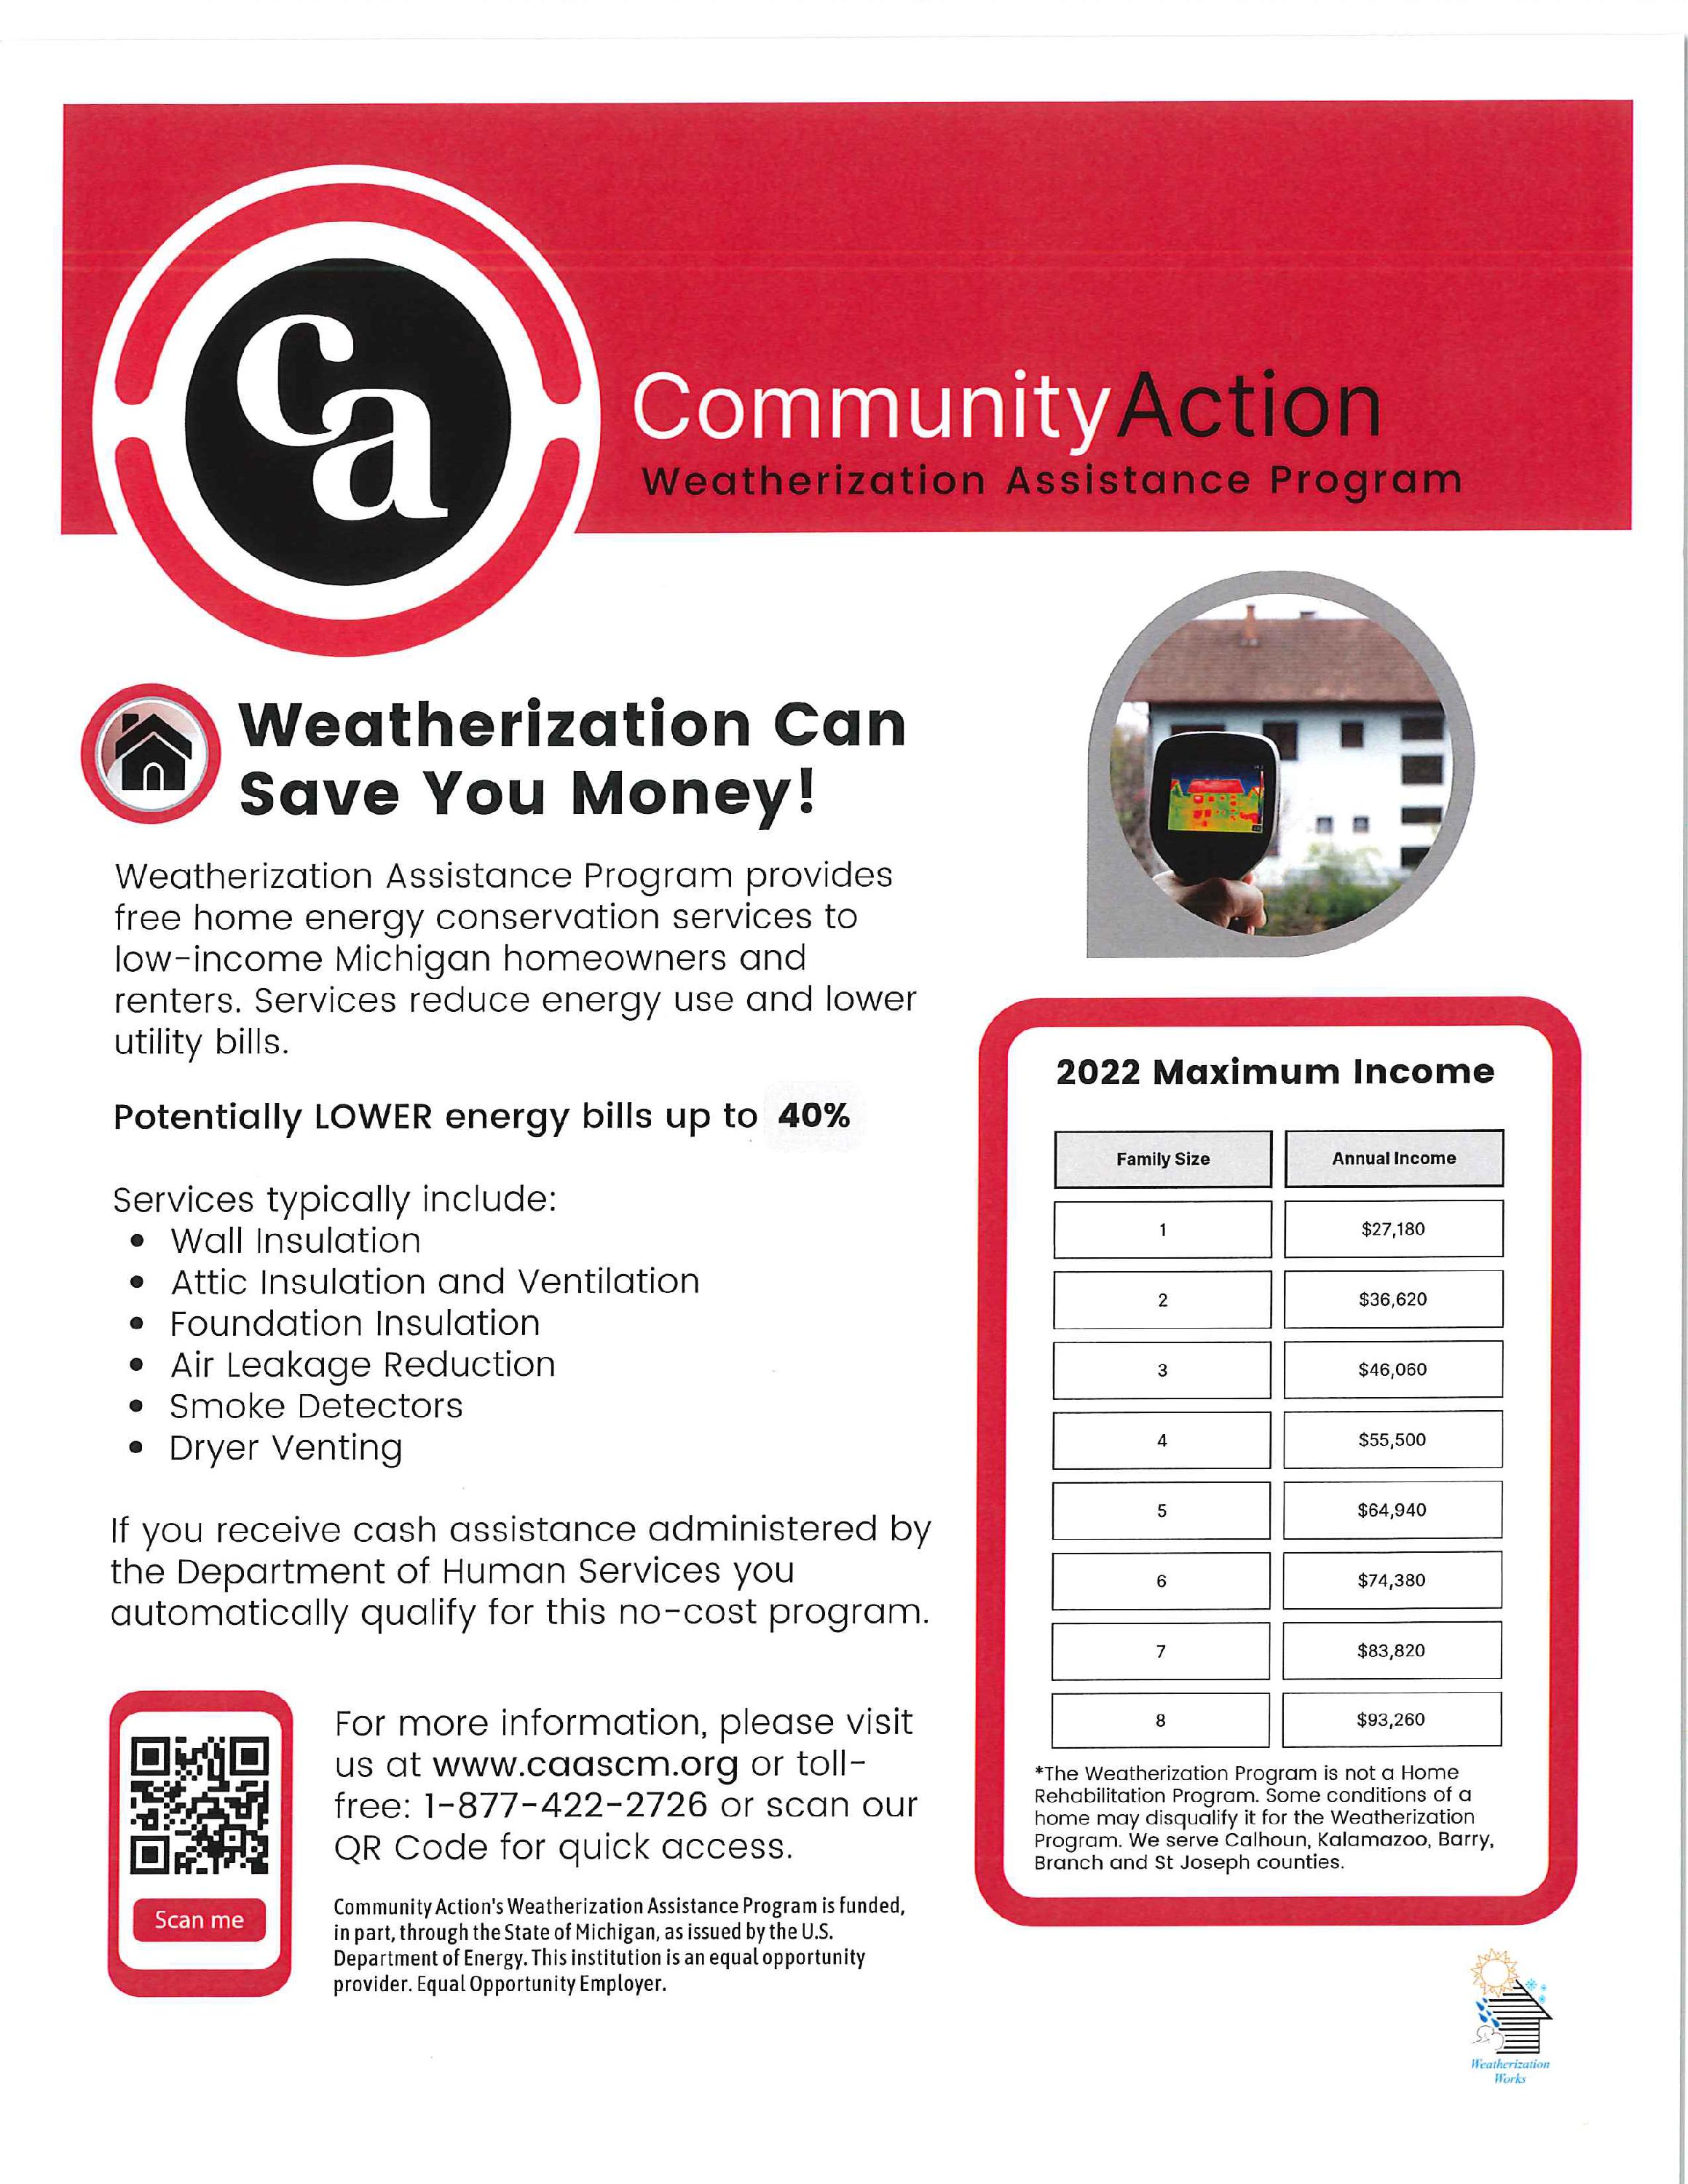 Community Action weatherization program flyer